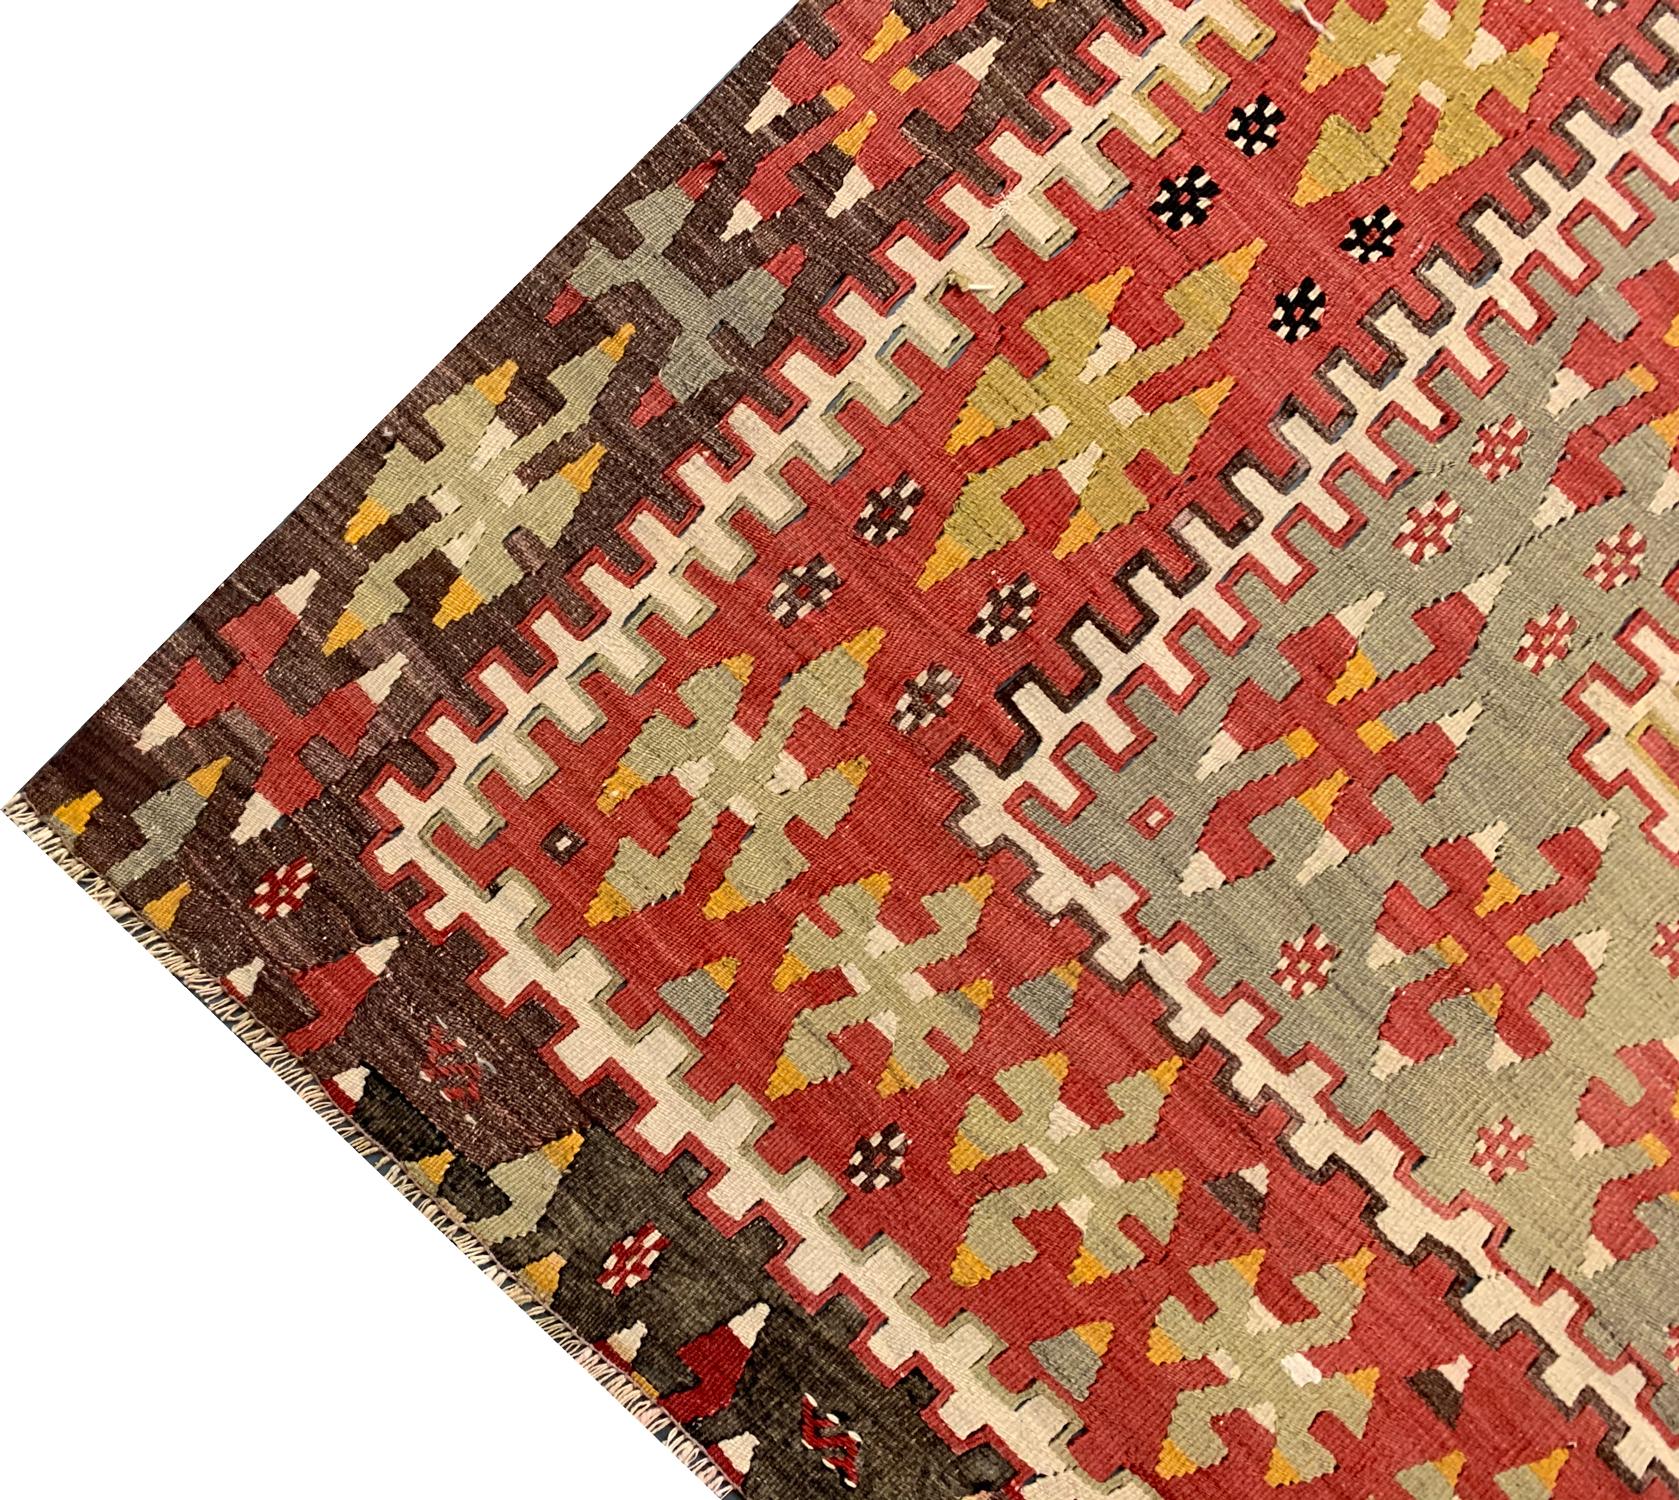 Hand-Woven Rare Turkish Kilim Rug, Antique Geometric Anatolian Kilims For Sale